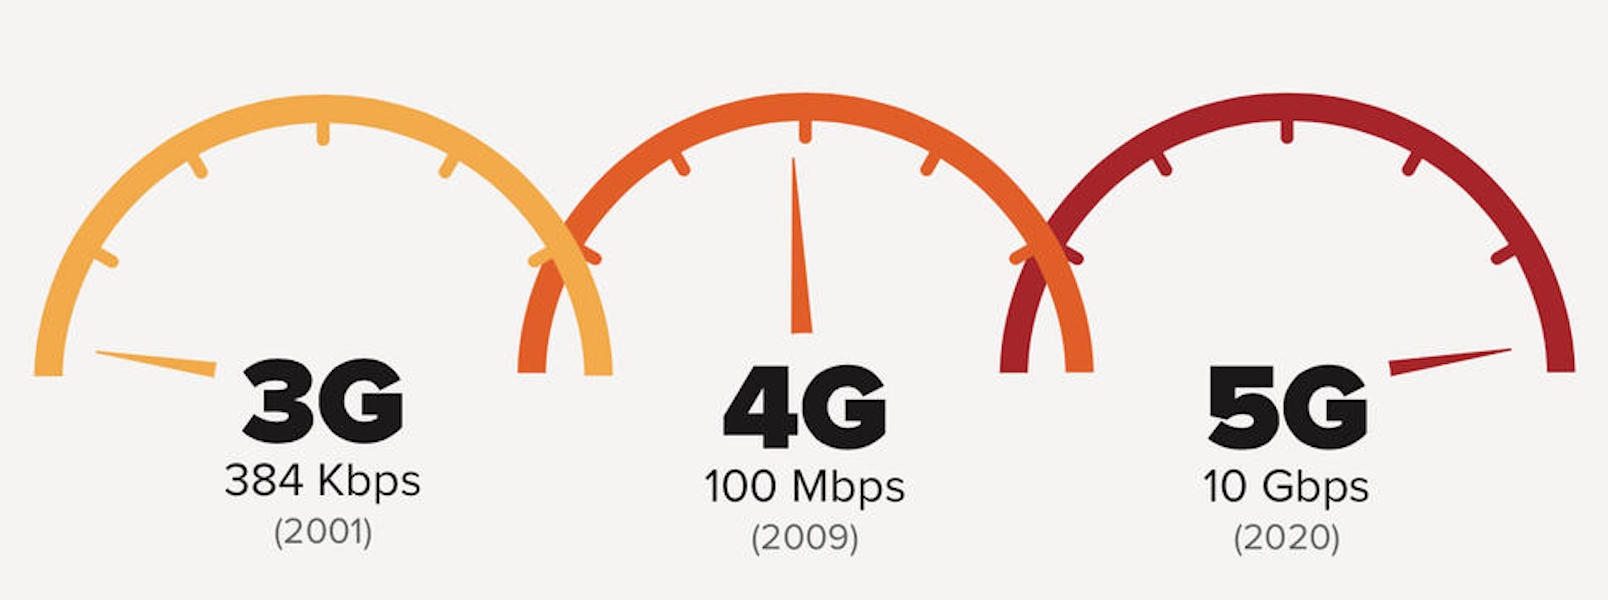 Обновить 4g. 5g vs 4g. 2g vs 5g. 5g скорость интернета. Скорость интернета 3g и 4g.